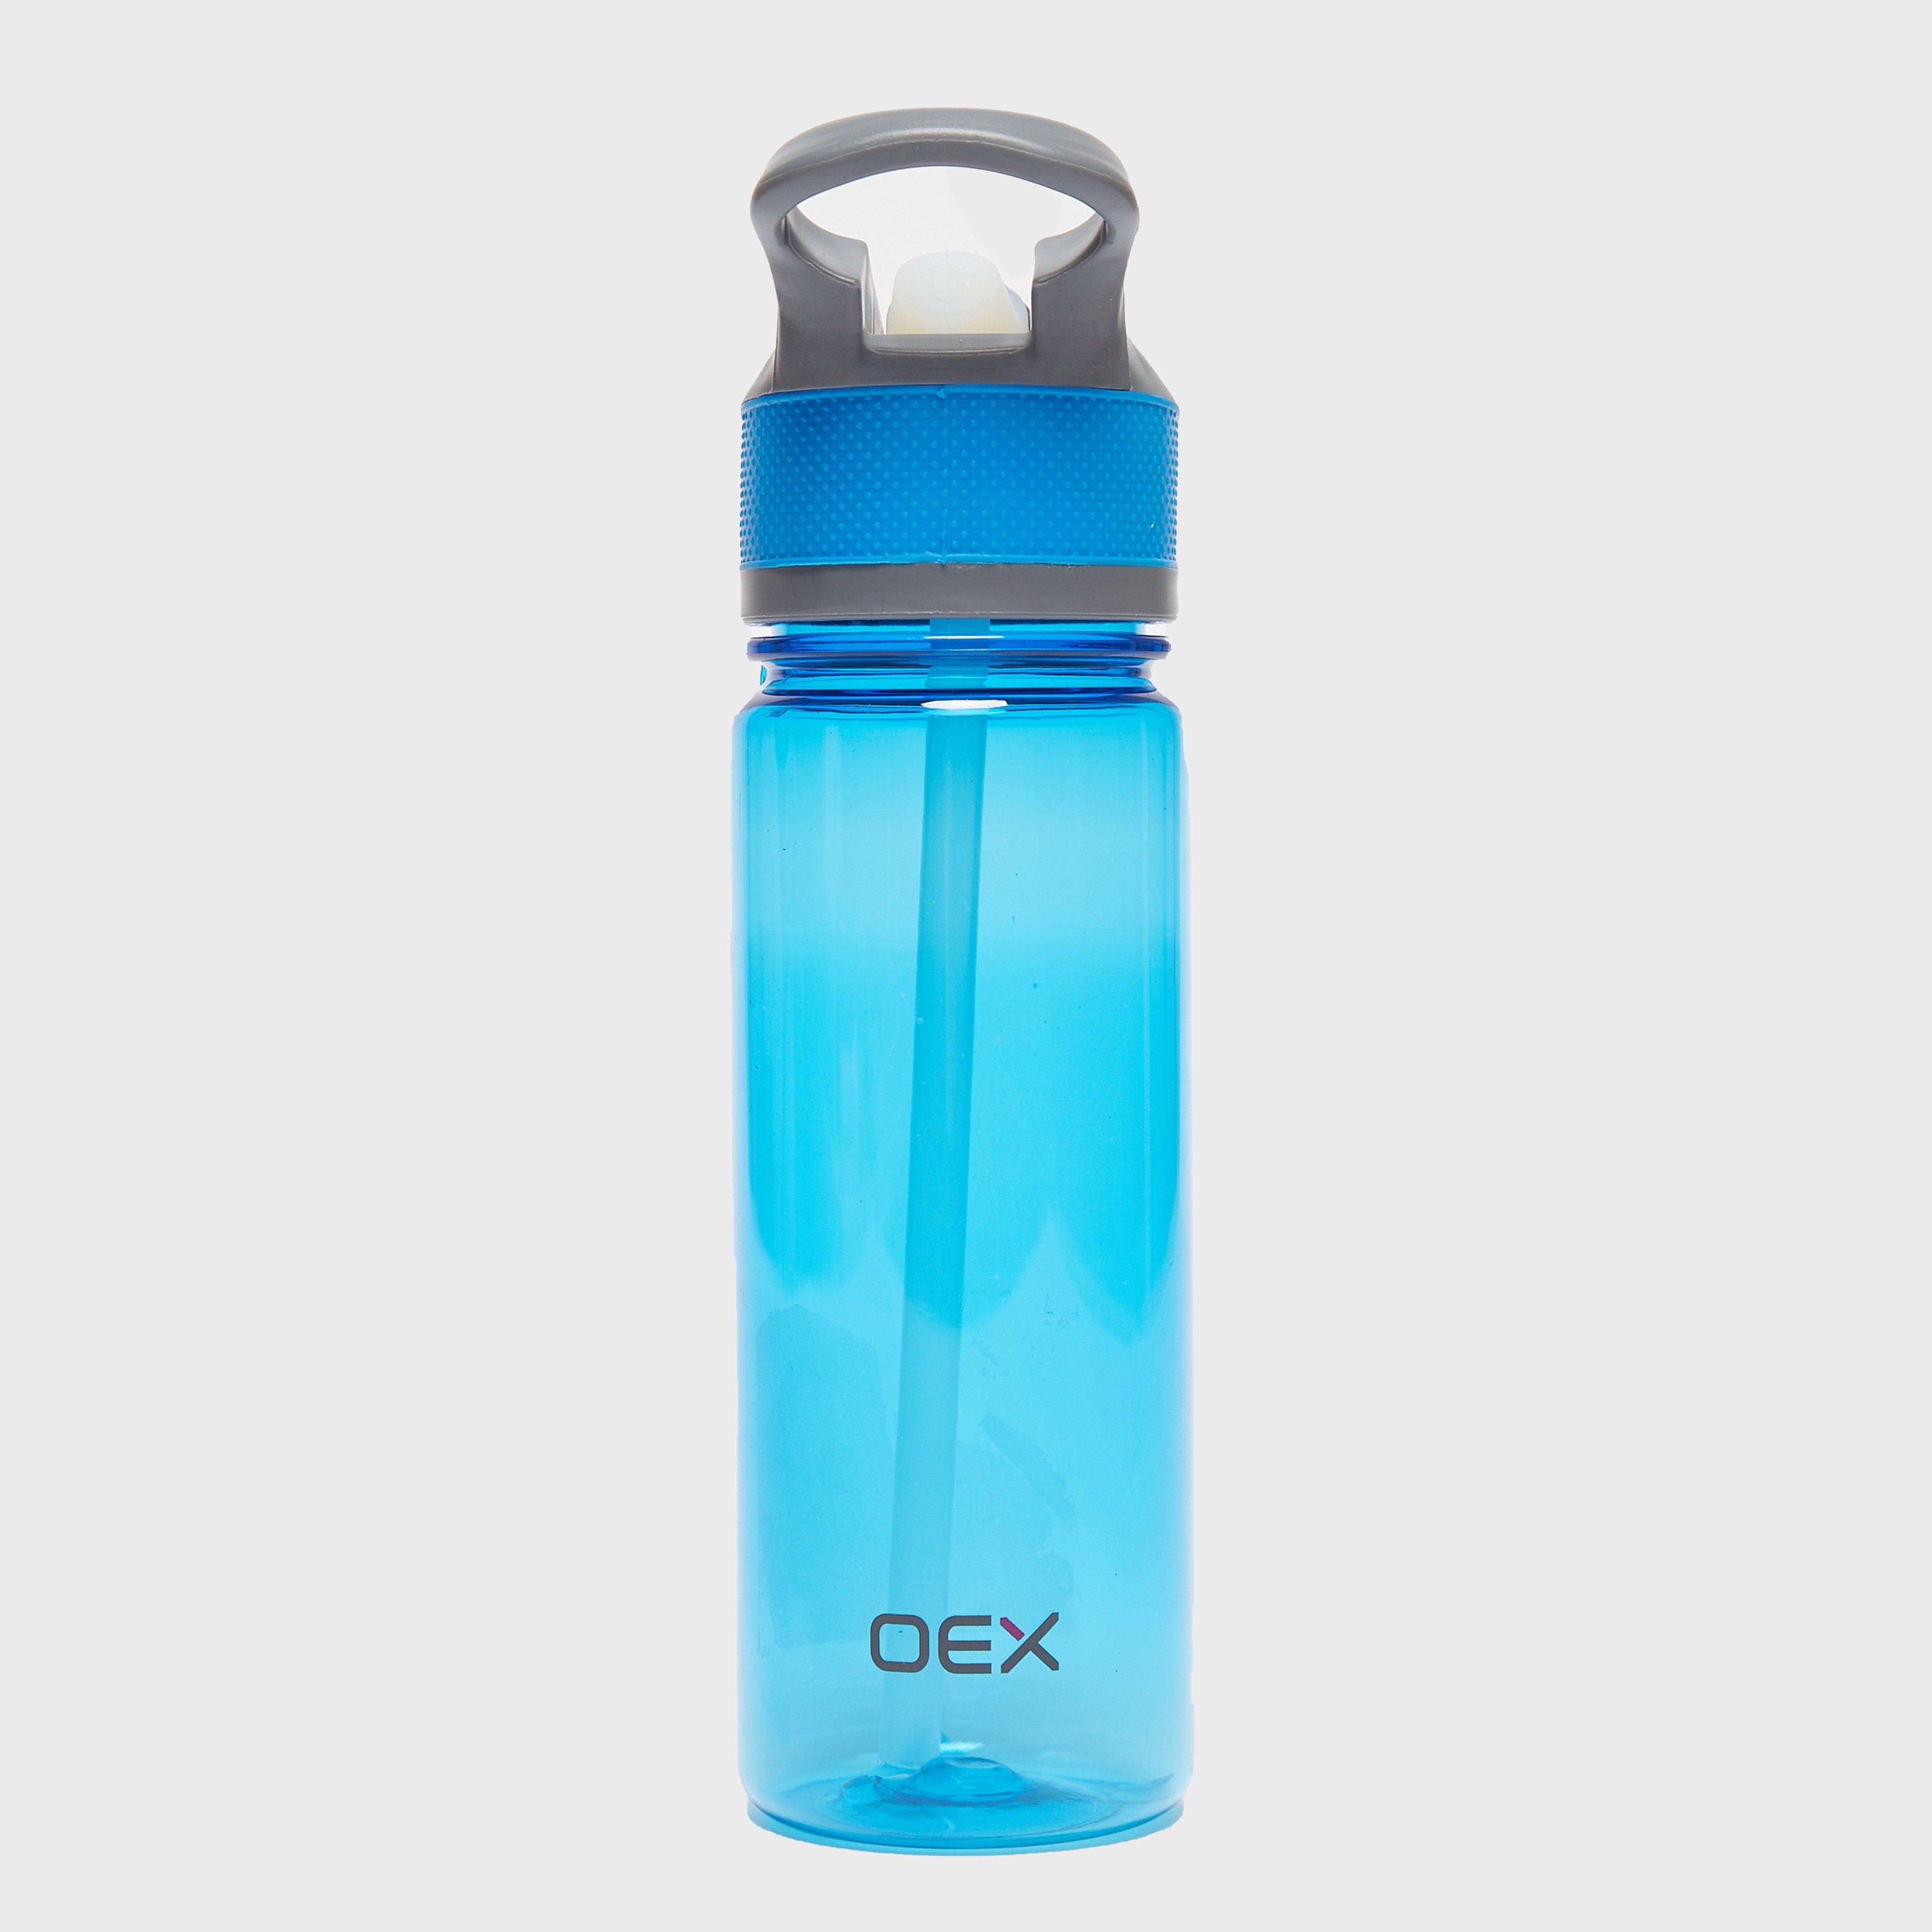 Oex Spout Water Bottle - Blue/mbl  Blue/mbl